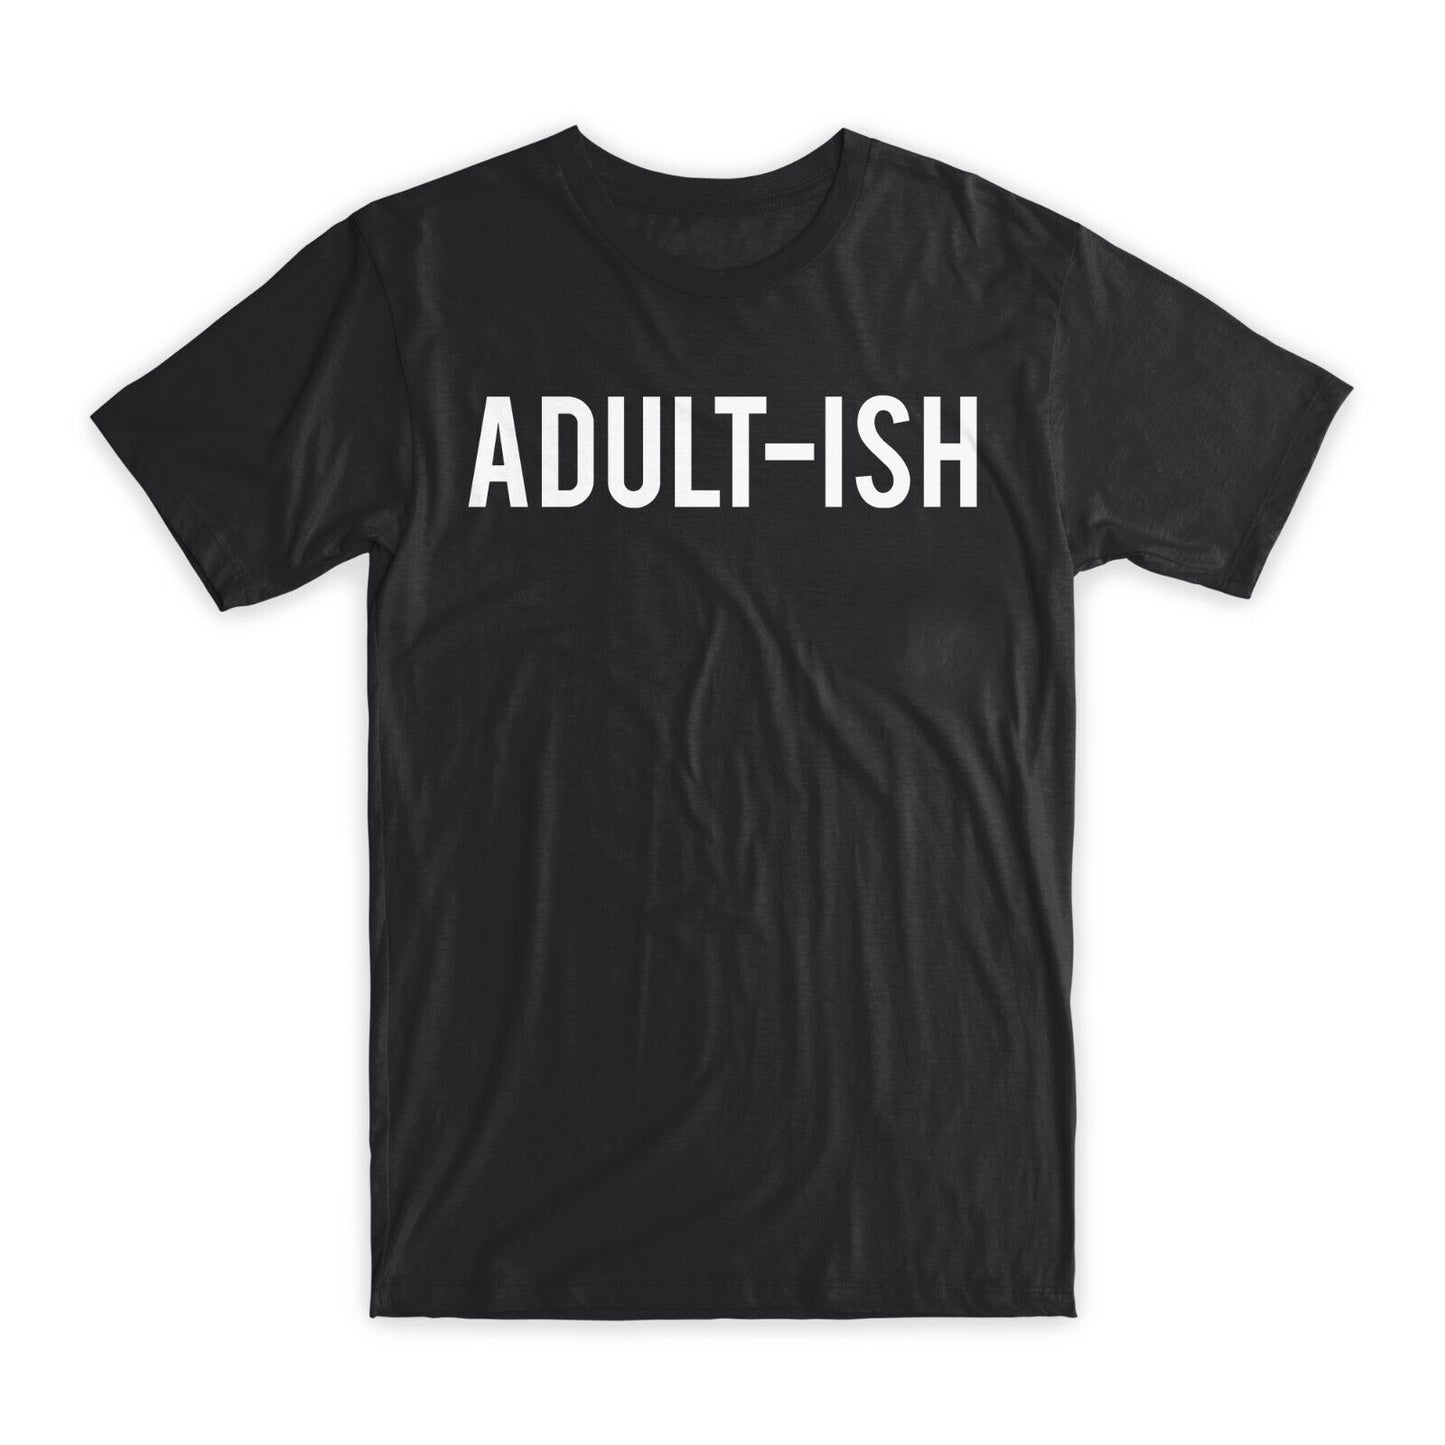 Adult-Ish Print T-Shirt Premium Soft Cotton Crew Neck Funny Tee Novelty Gift NEW